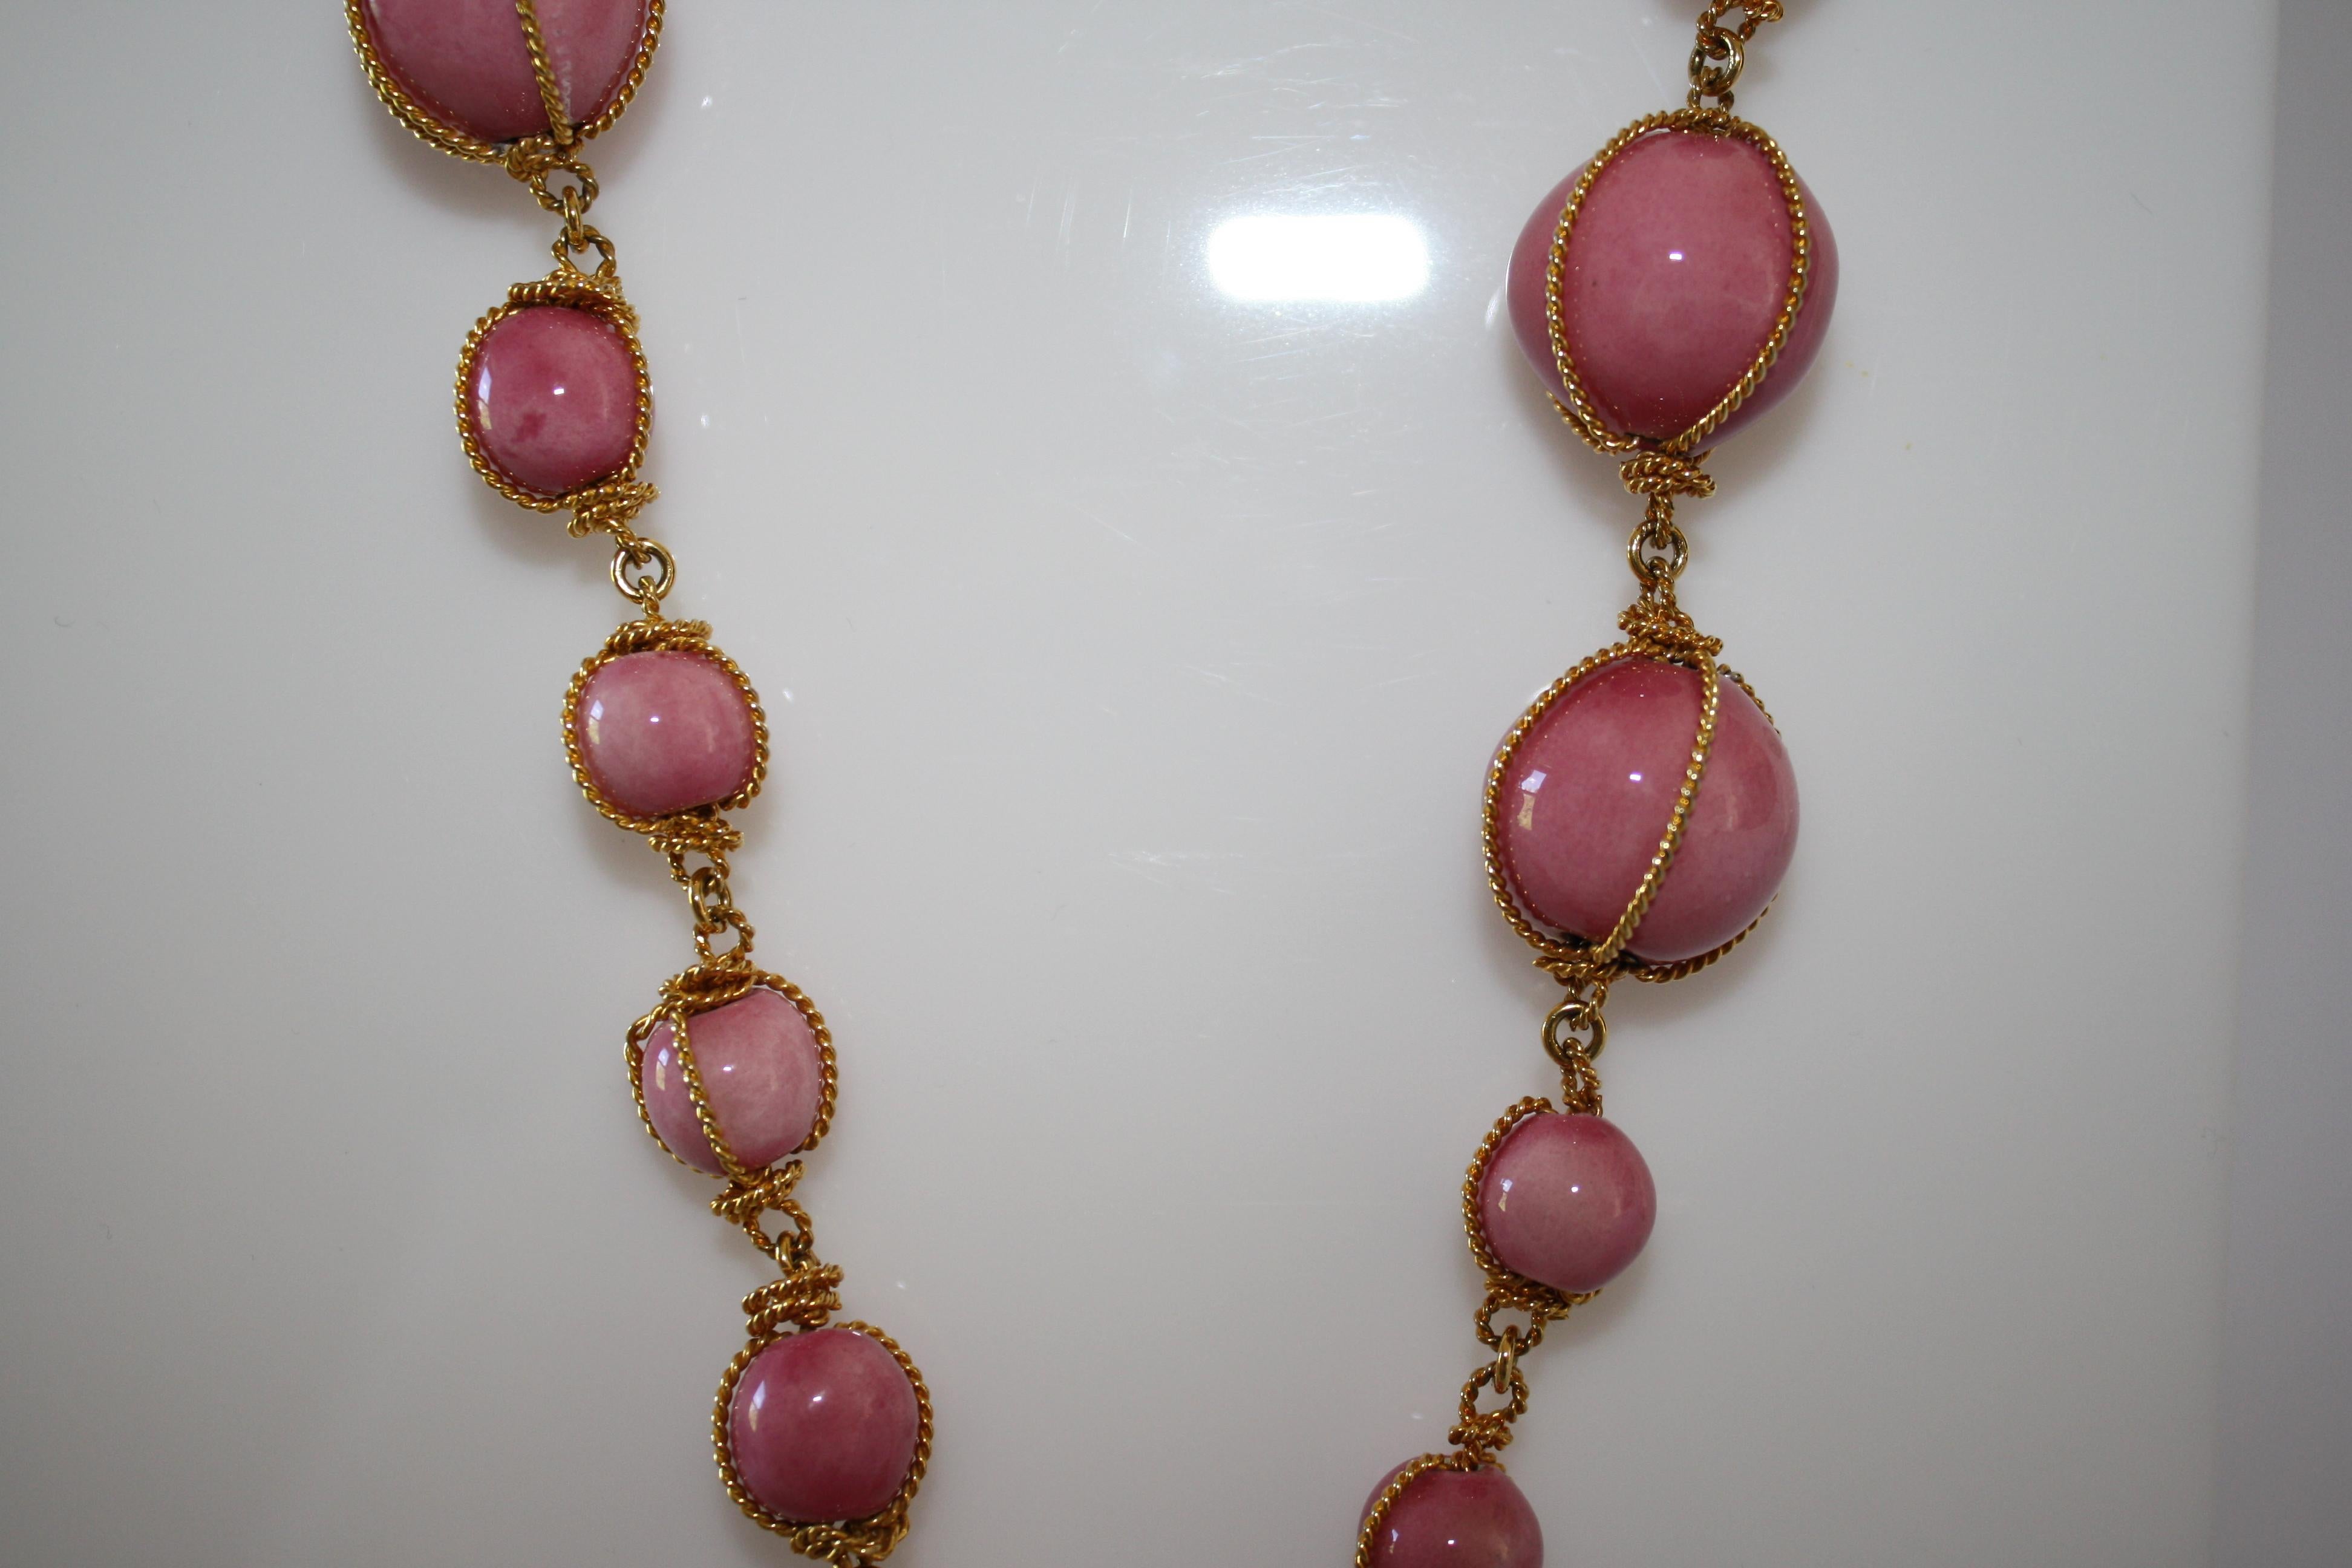 Carole Saint Germes ceramic bead necklace with gilded heart pendant. Pendant has pink pate de verre glass throughout. 